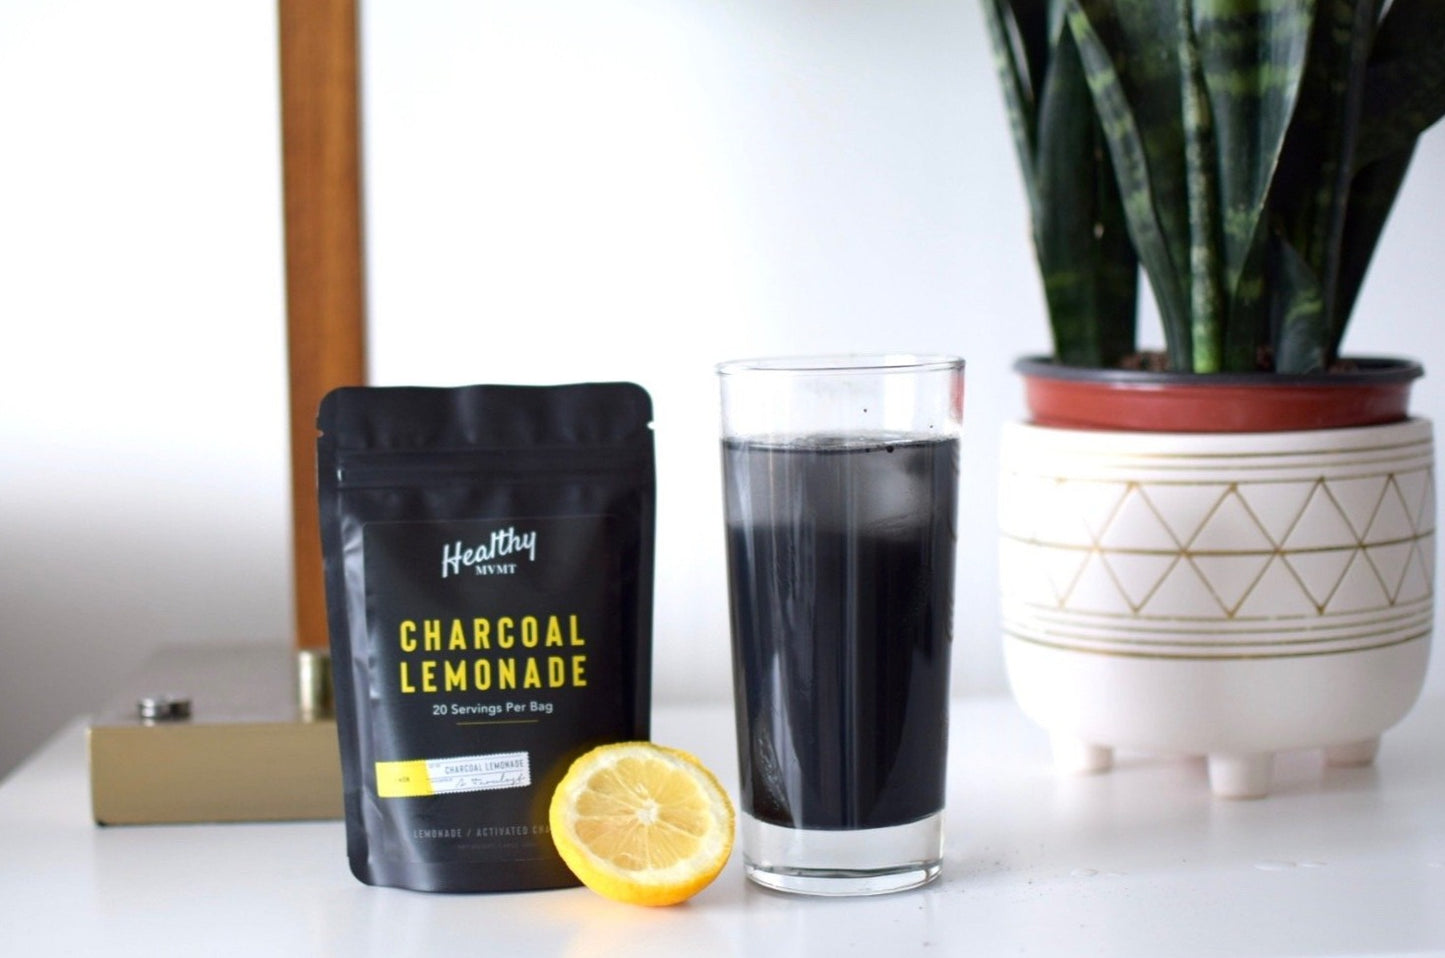 Charcoal Lemonade | Juice Powder by HealthyMVMT